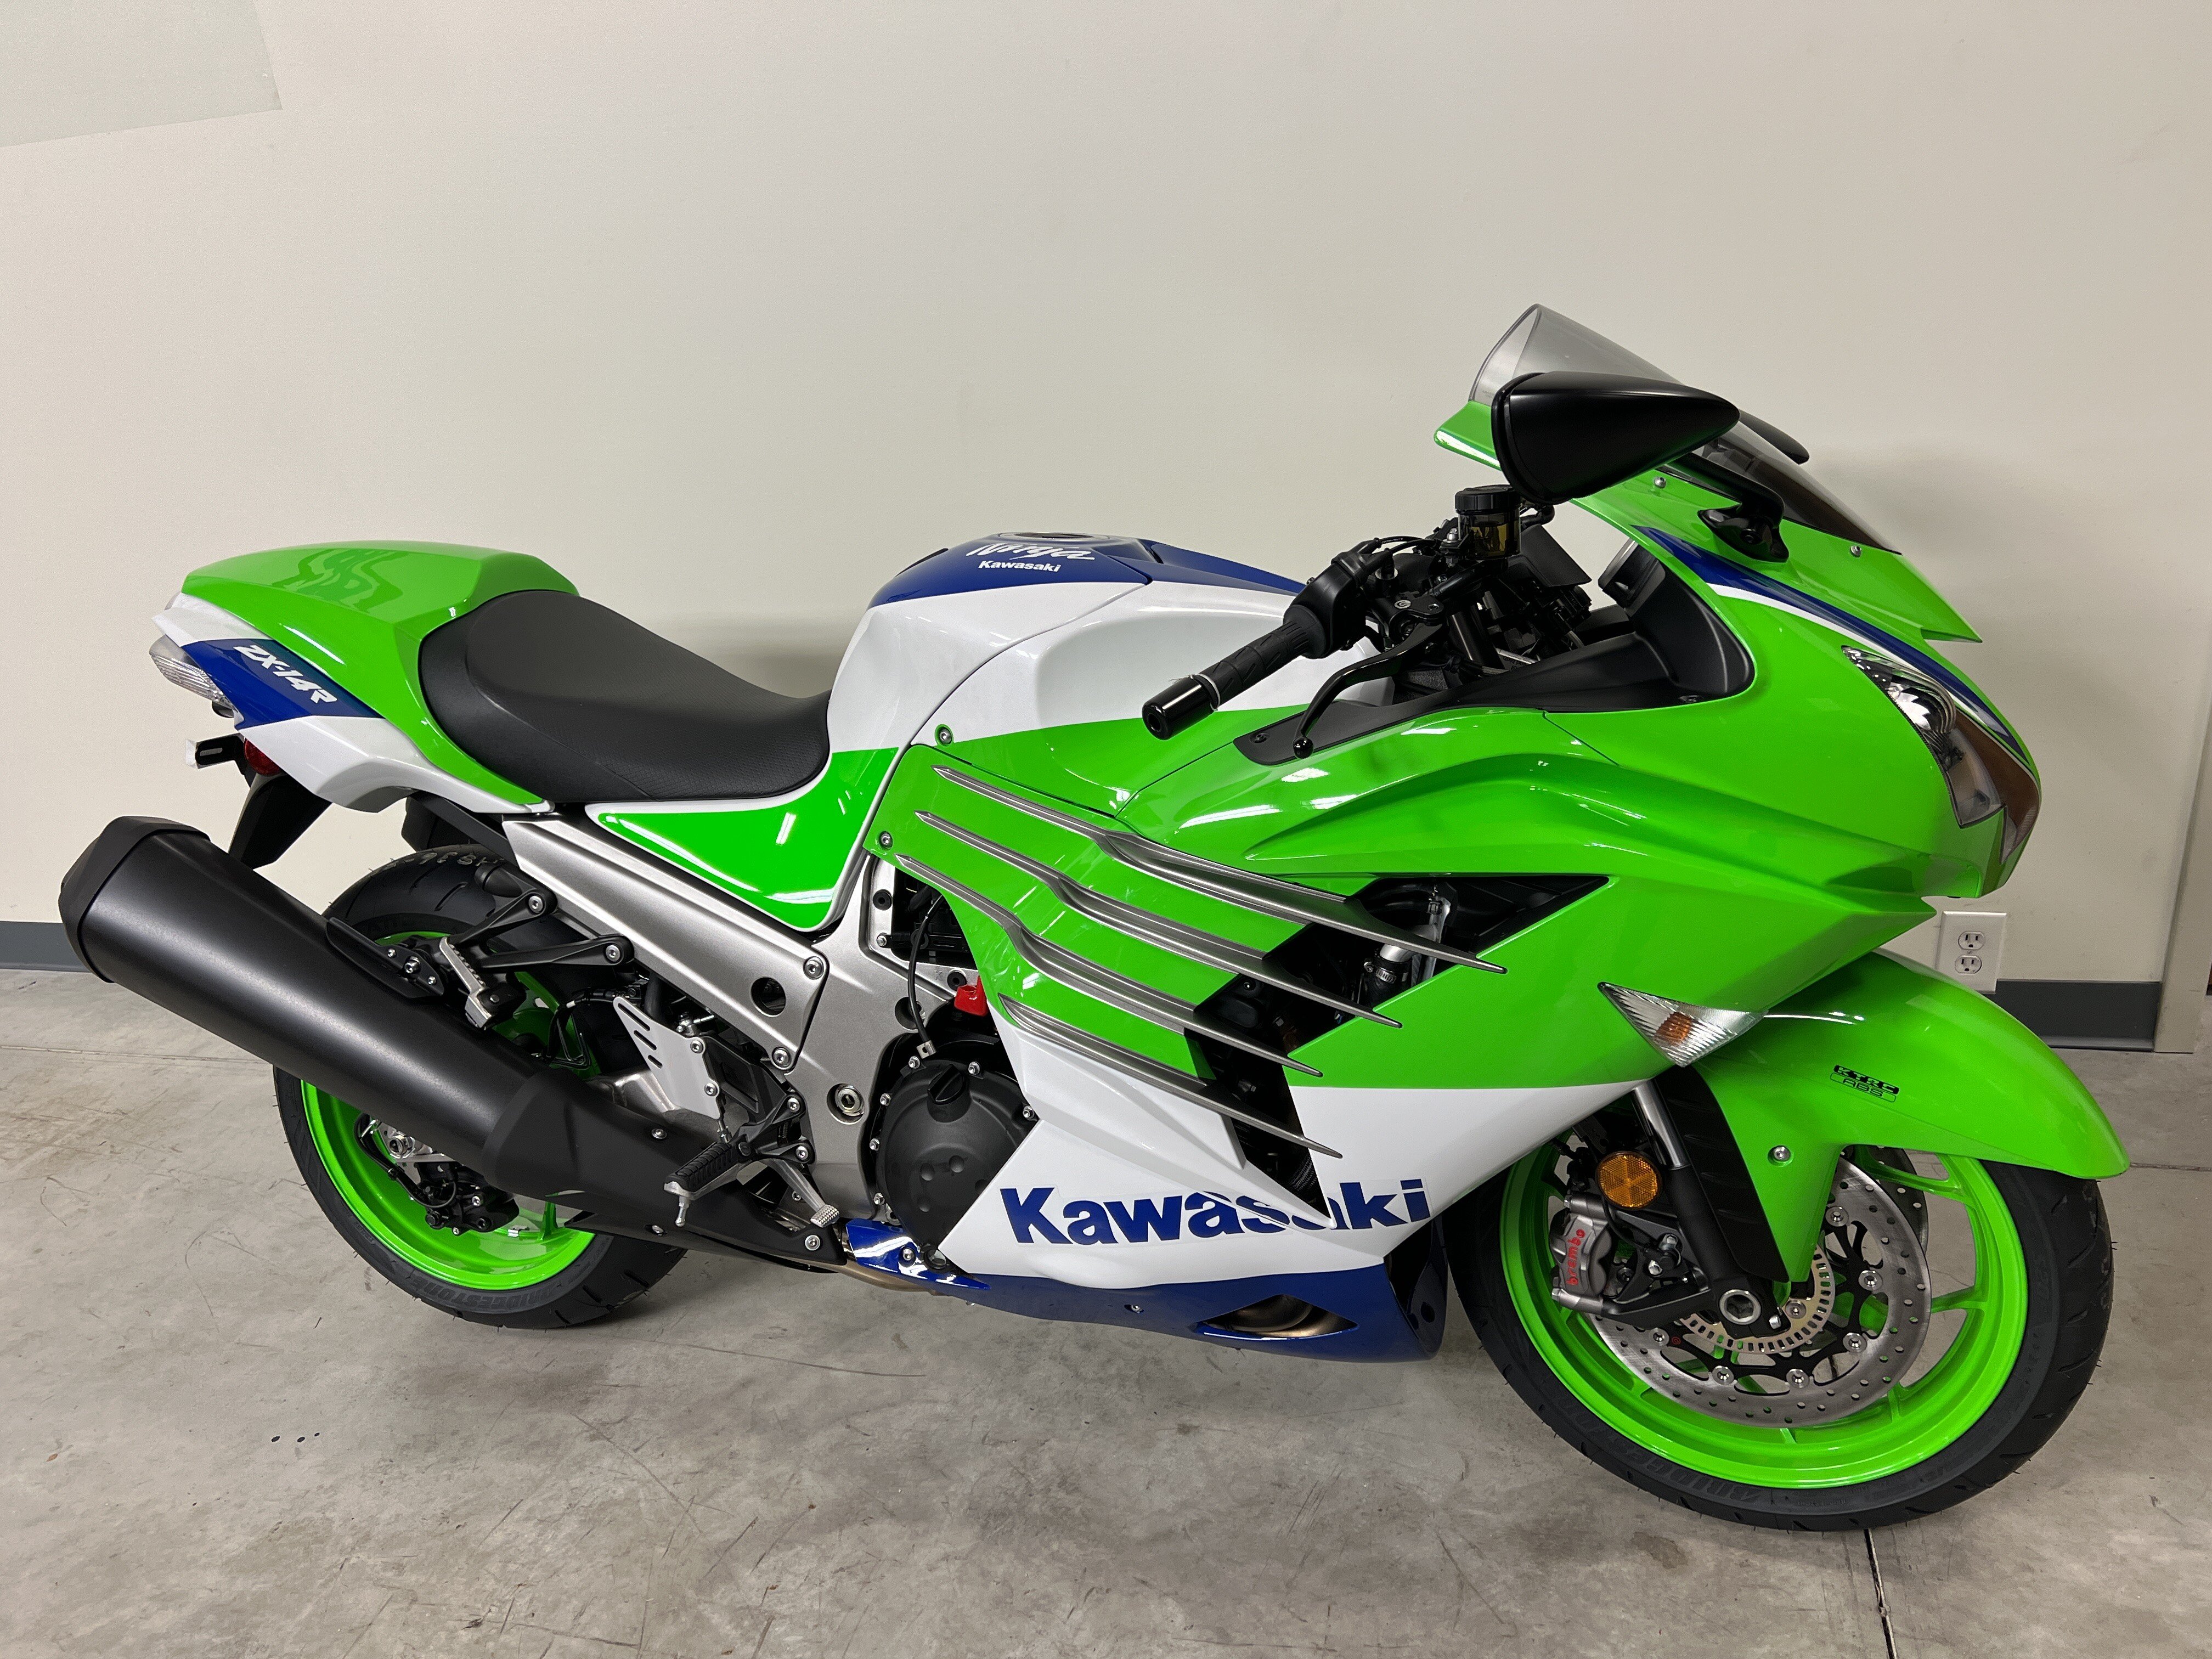 Kawasaki Ninja ZX-14R Motorcycles for Sale near Columbus, Ohio 